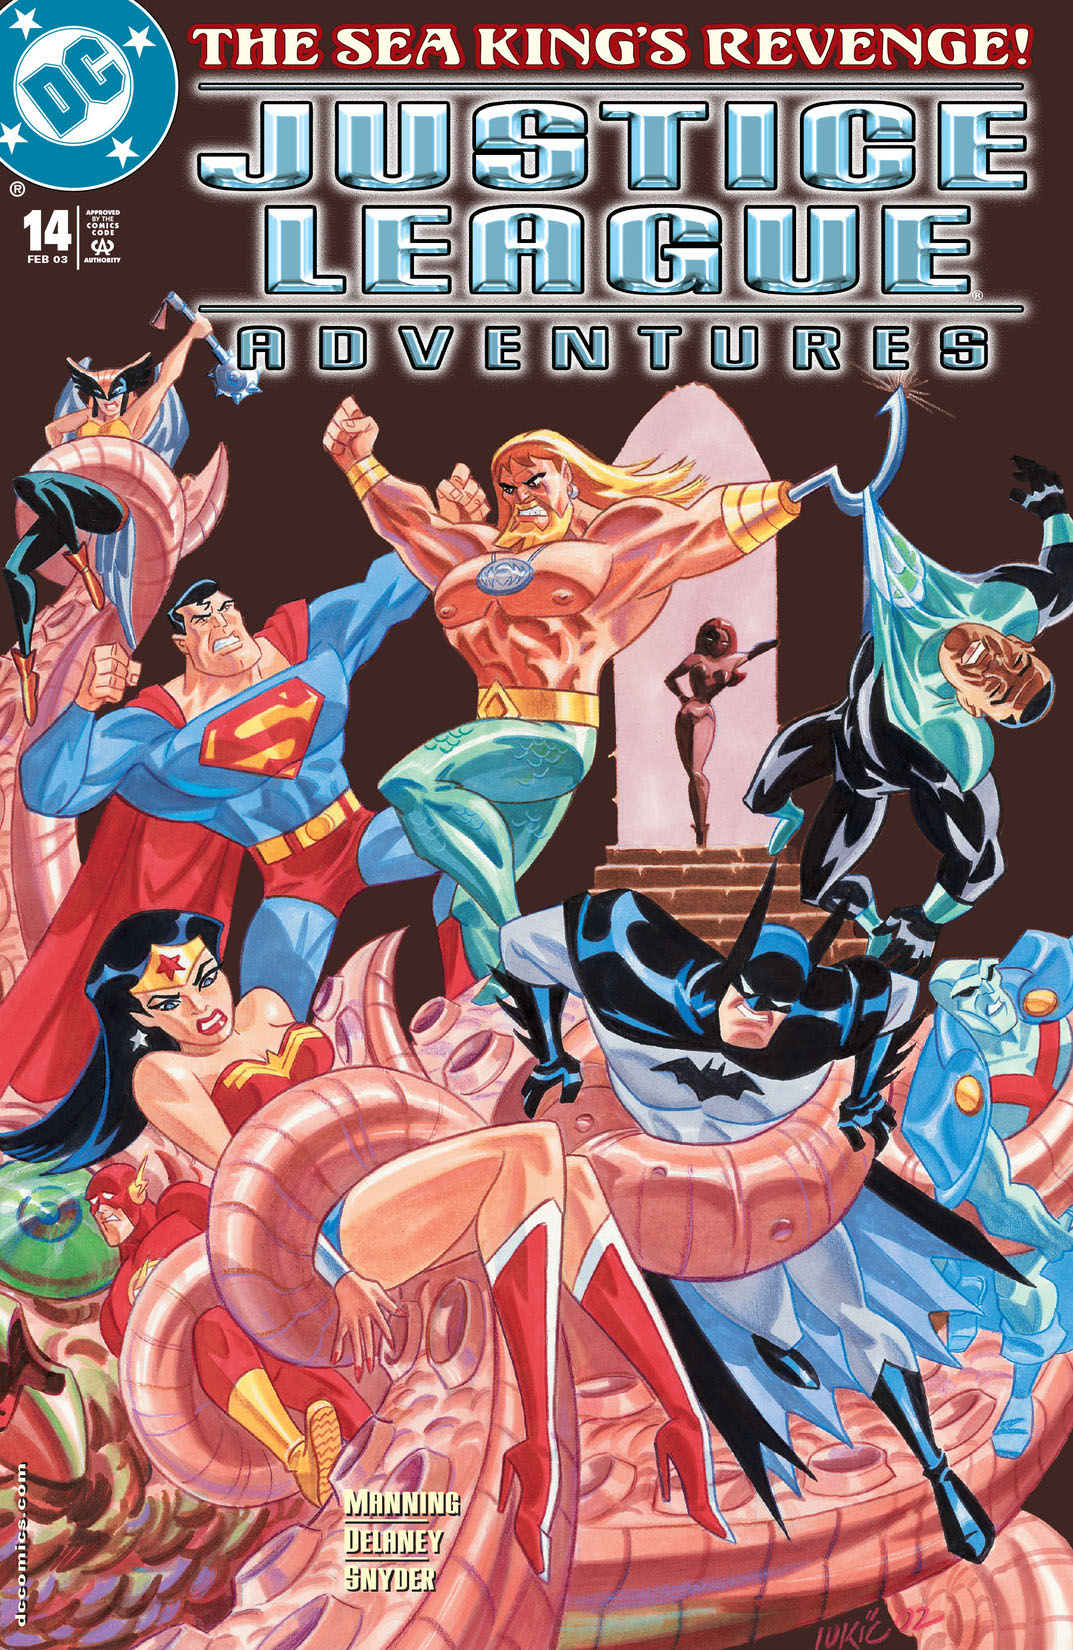 Justice League Adventures #14 preview images